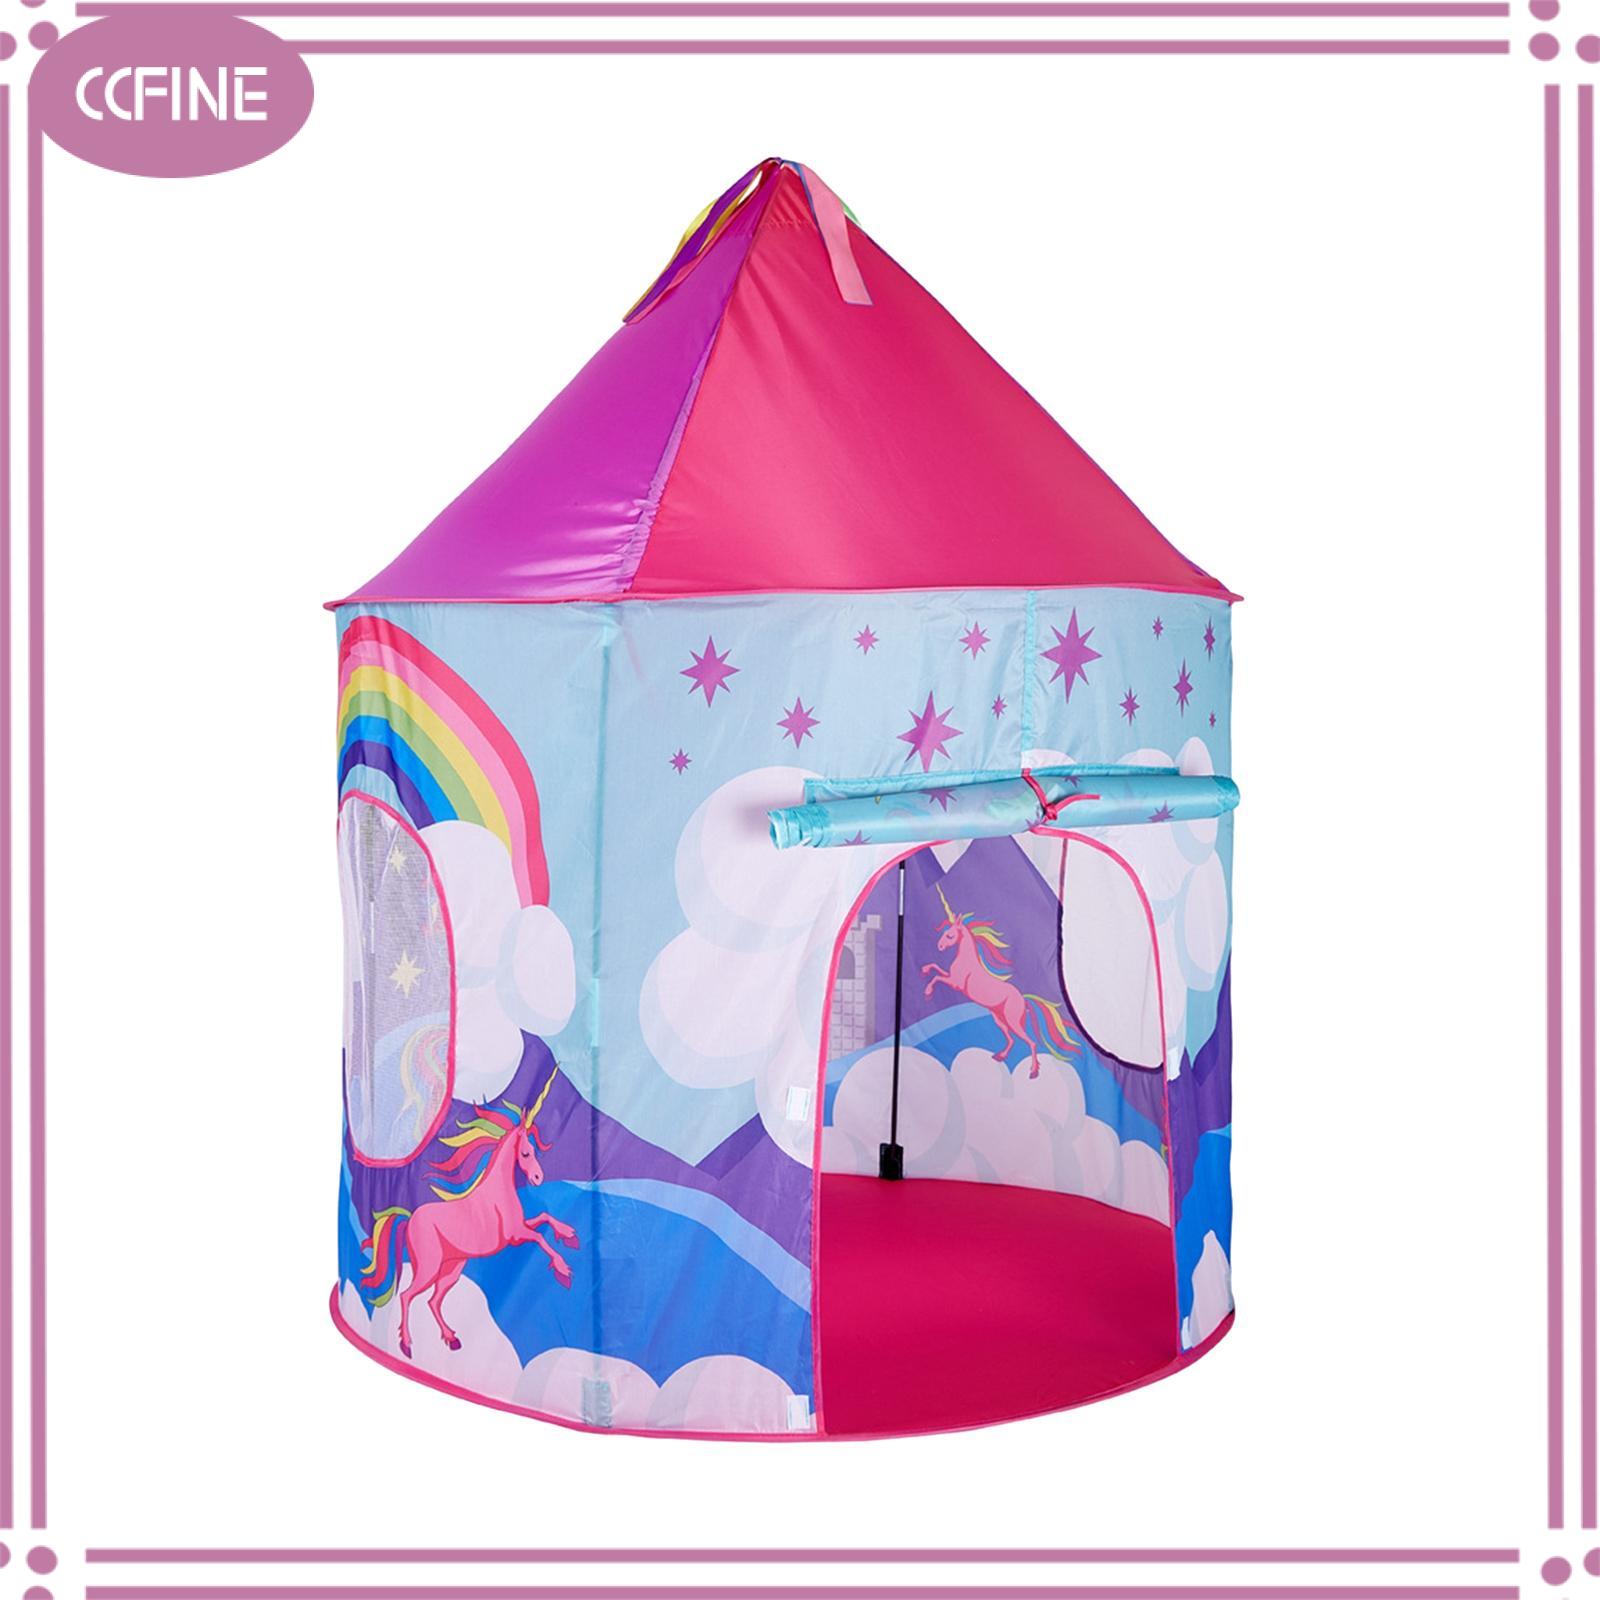 CCFine Child Castle Play Tent Portable Princess Tent for Daycare